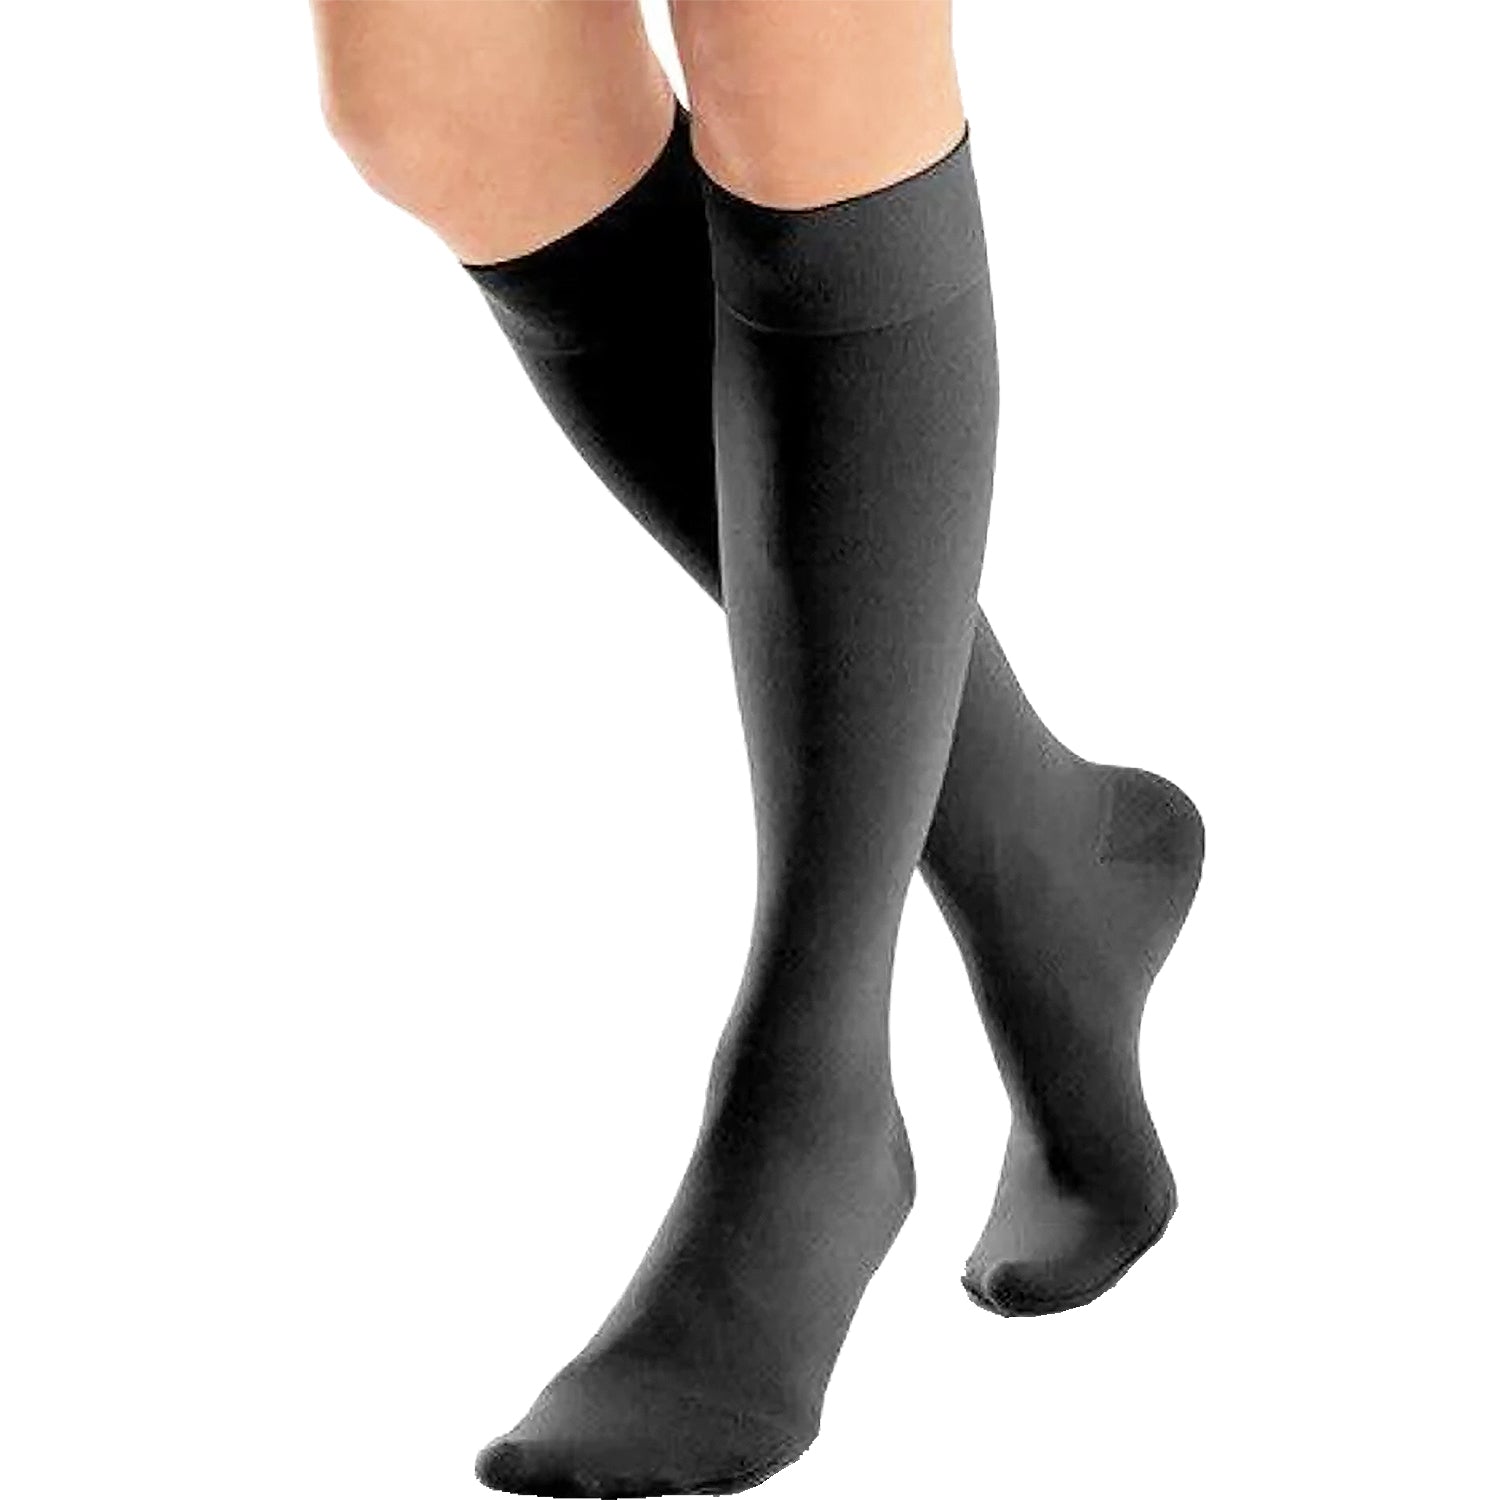 Women's Jobst Opaque Knee High Socks 15-20mmHg Black Medium – Footwear etc.